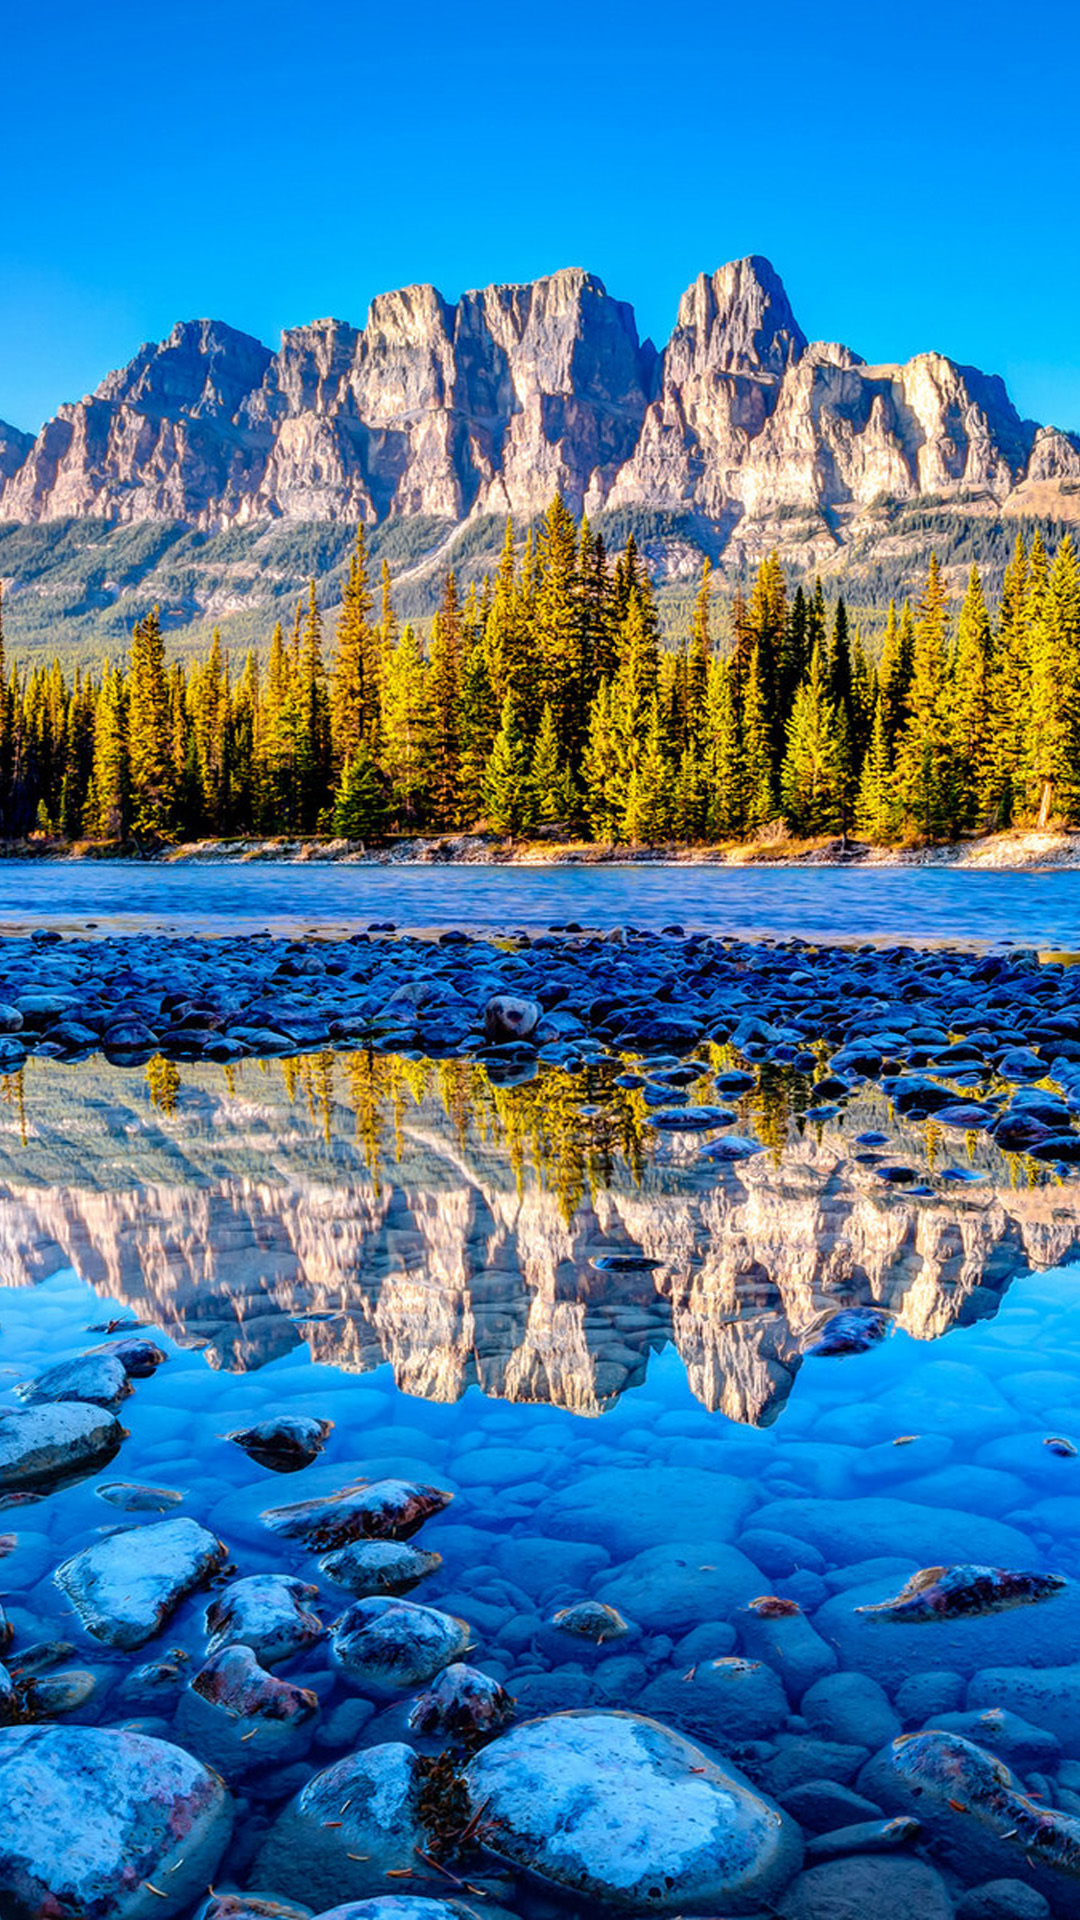 Beautiful Banff National Park iphone 6 plus wallpaper | iPhone 6 ...